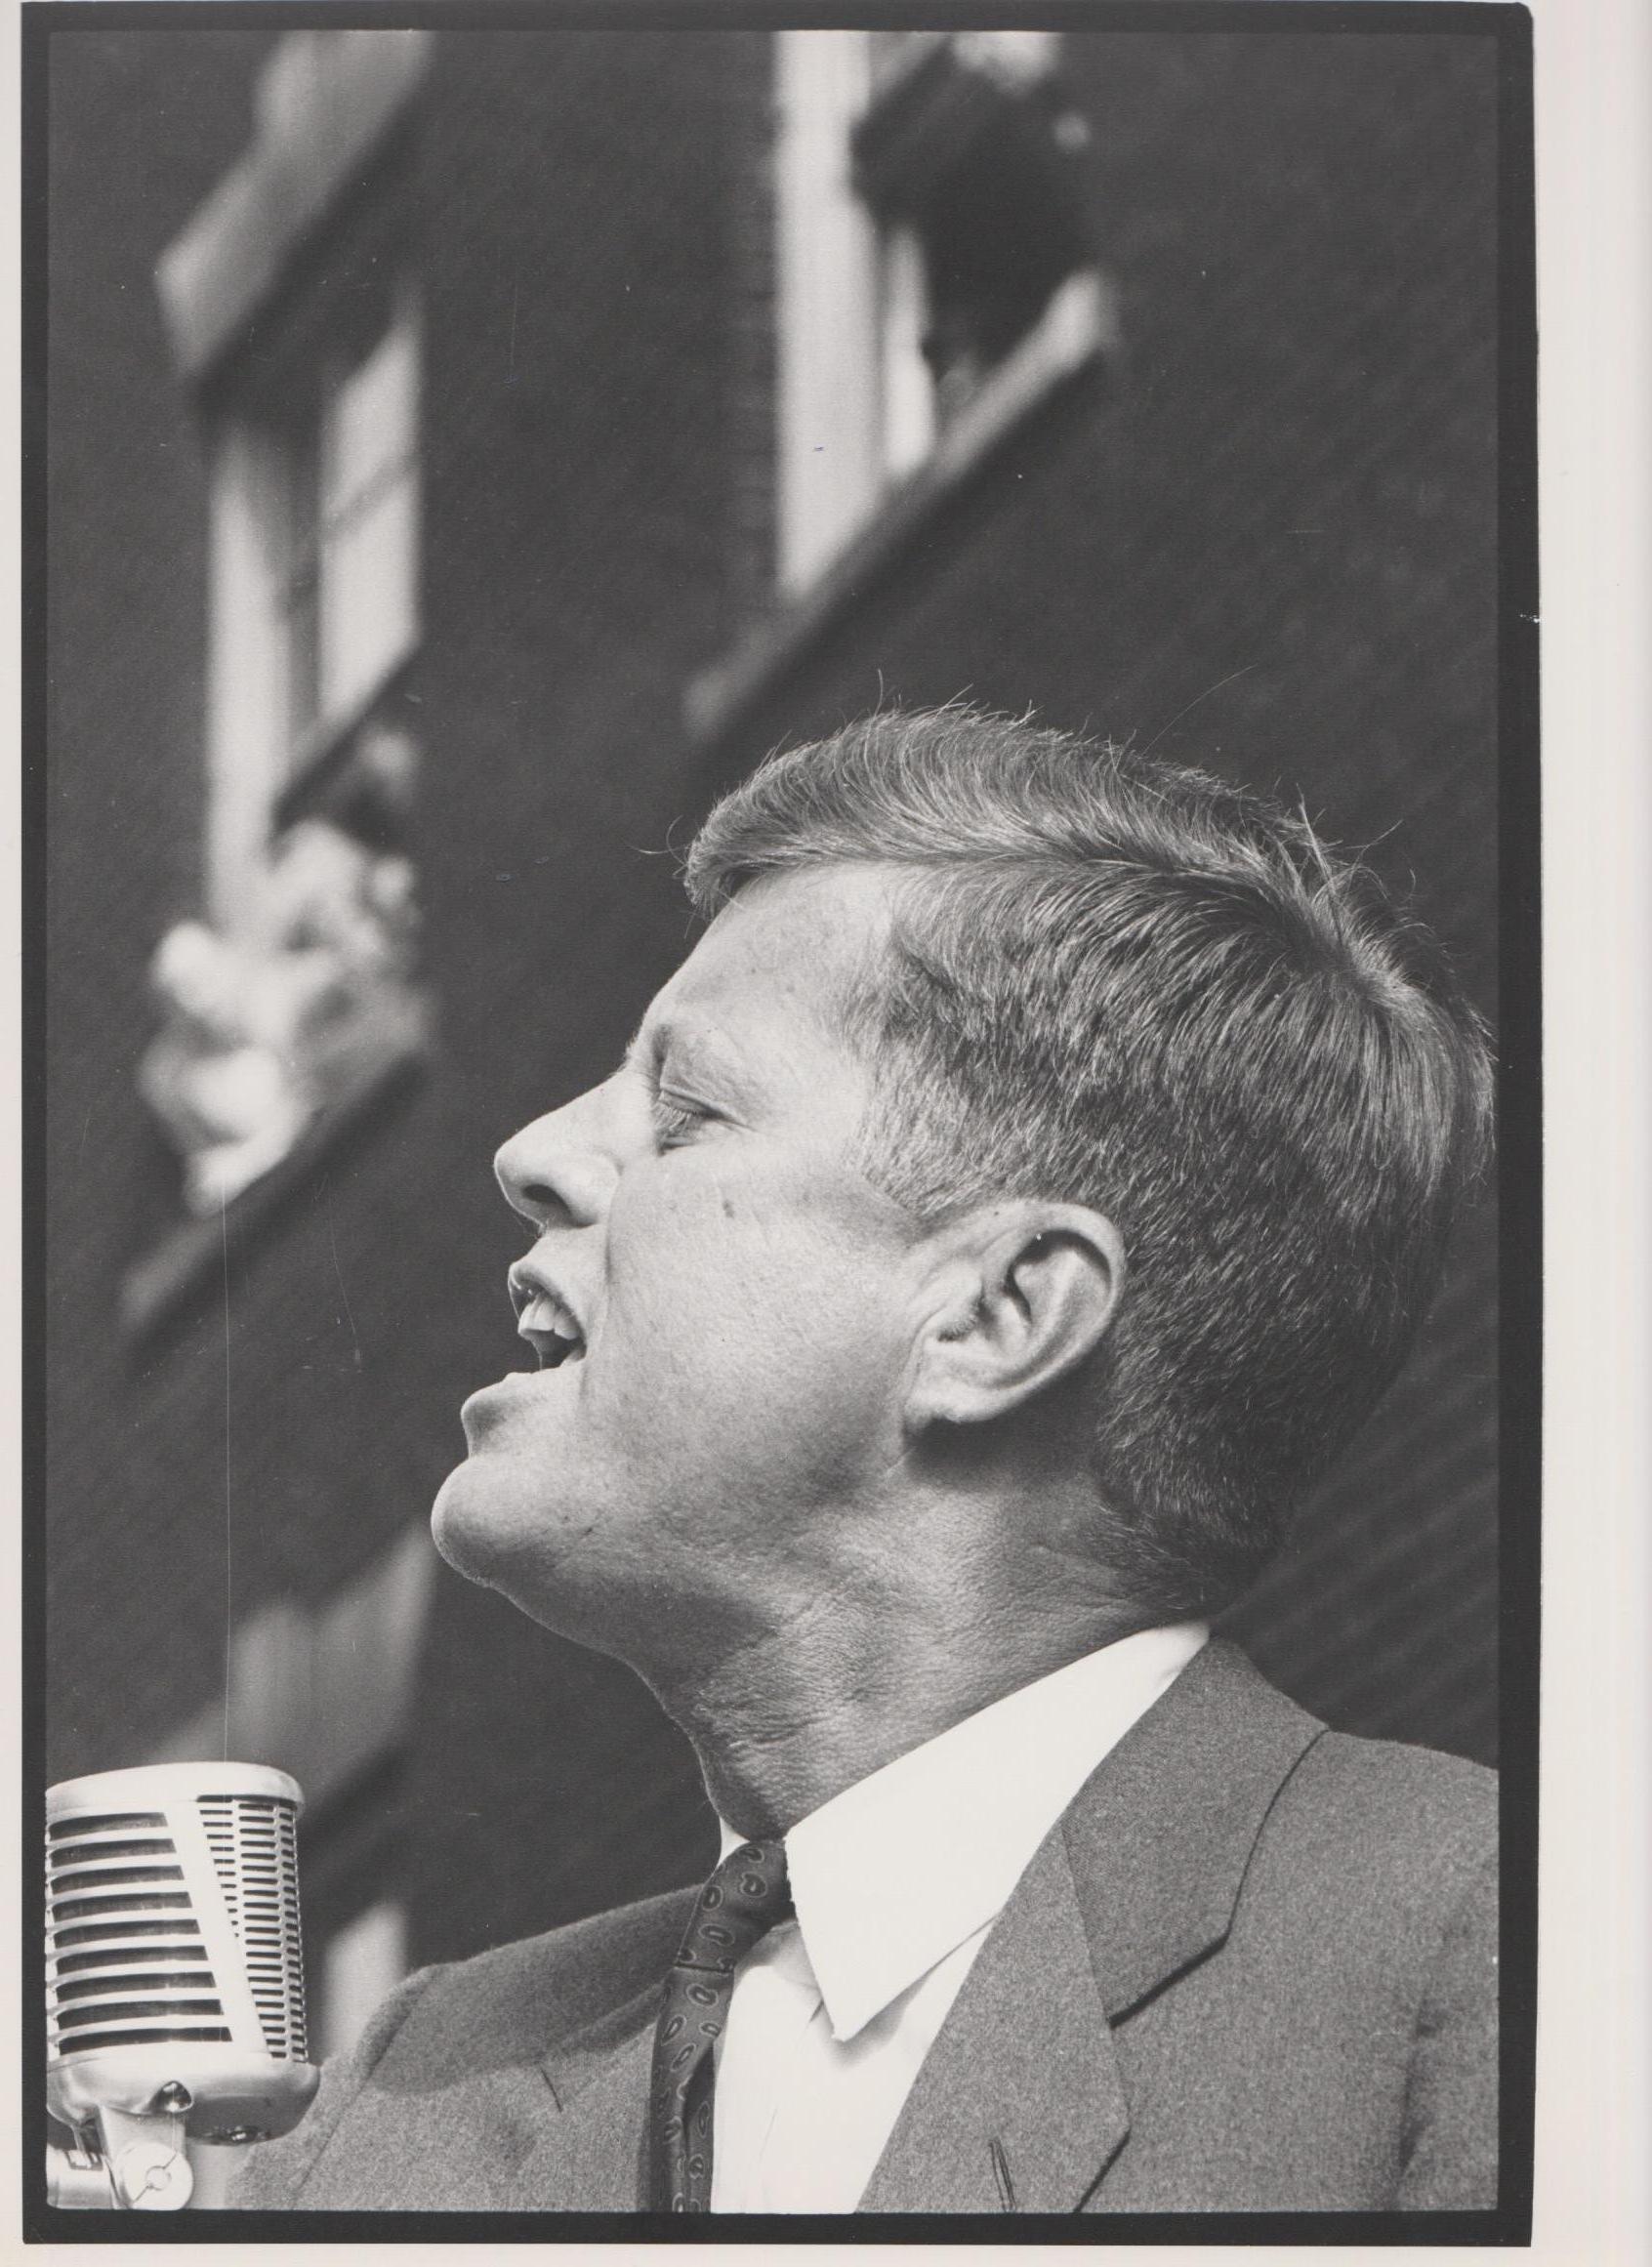 JFK speaking - John F. Kennedy Election campaign 1960